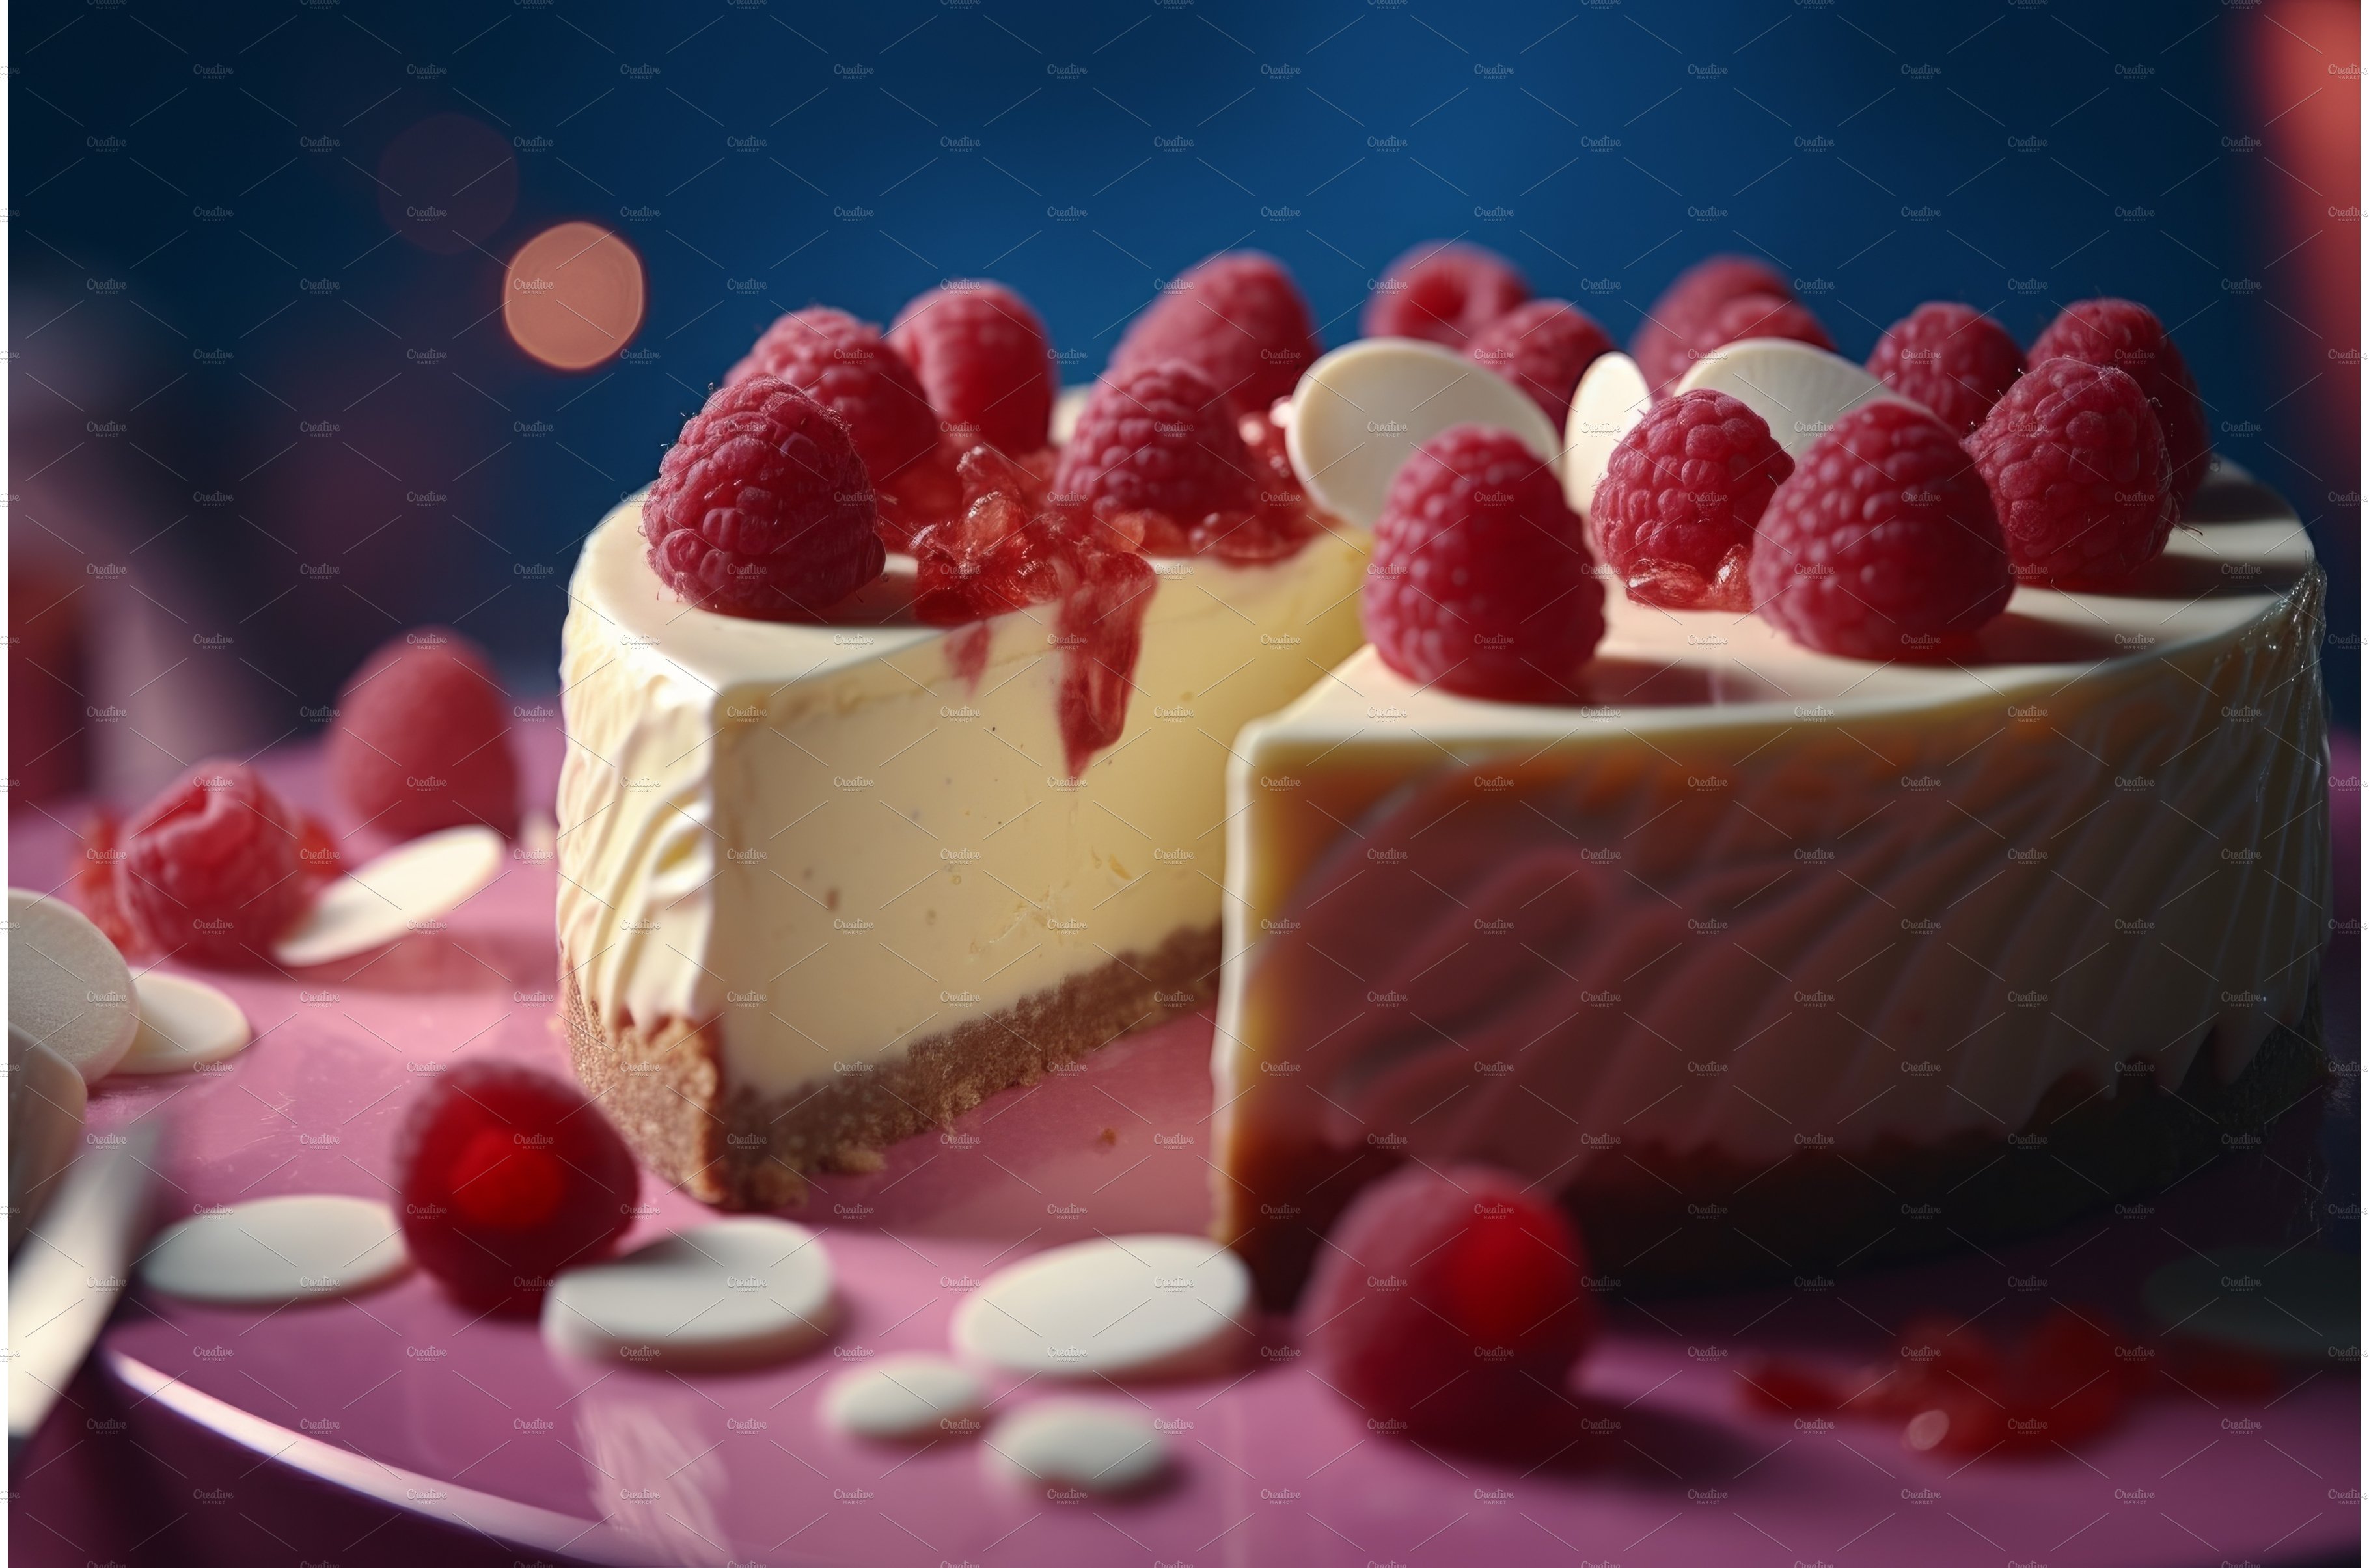 Restaurant raspberry cheesecake cover image.